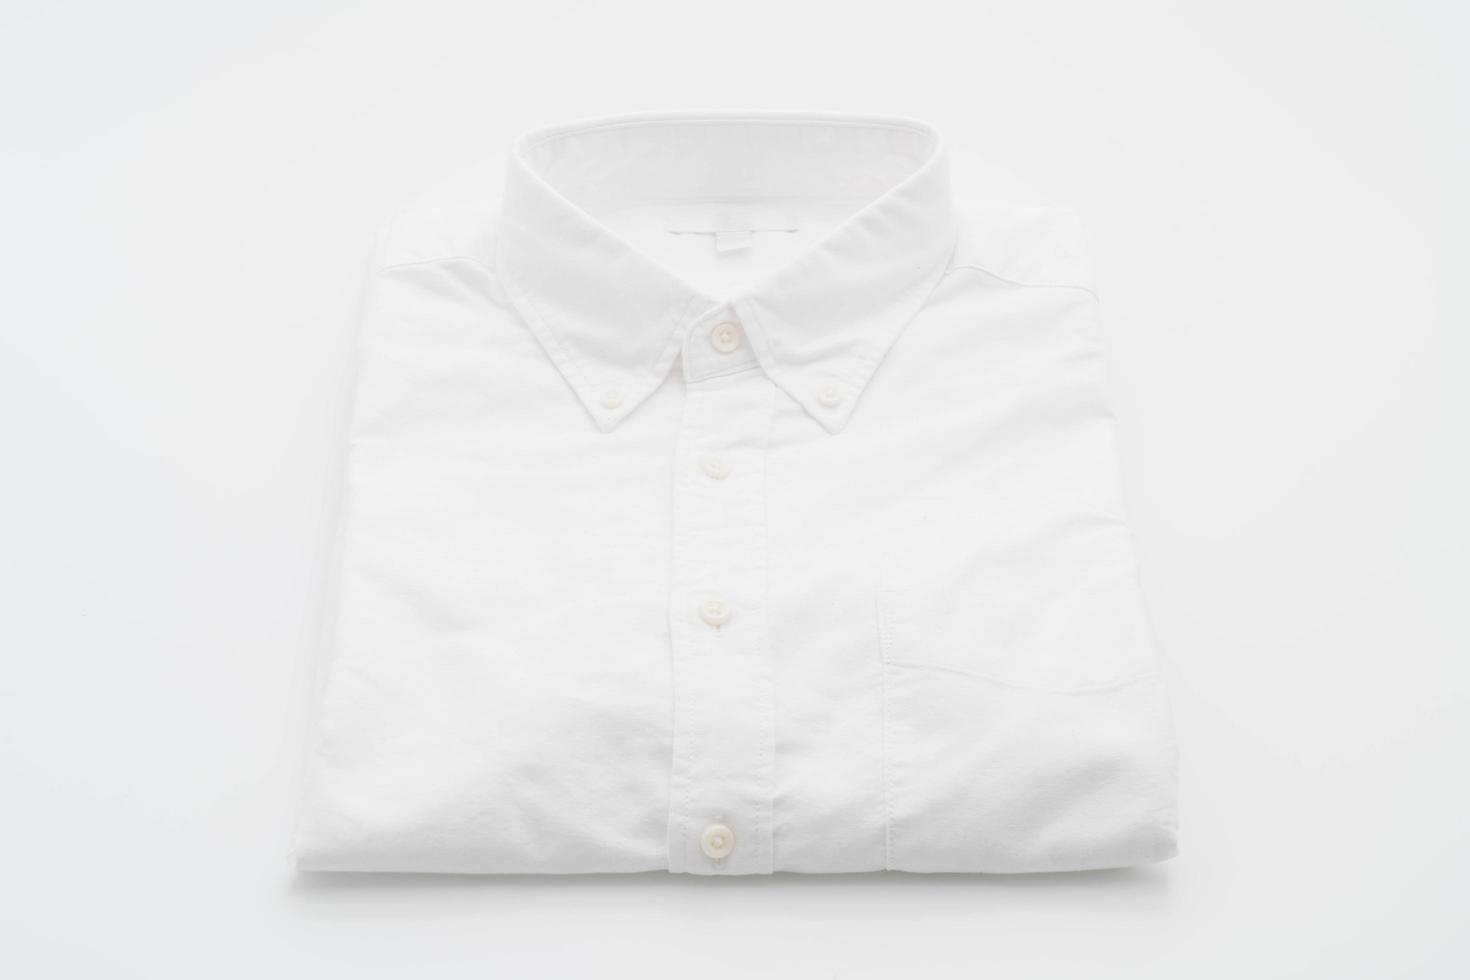 White shirt on white photo